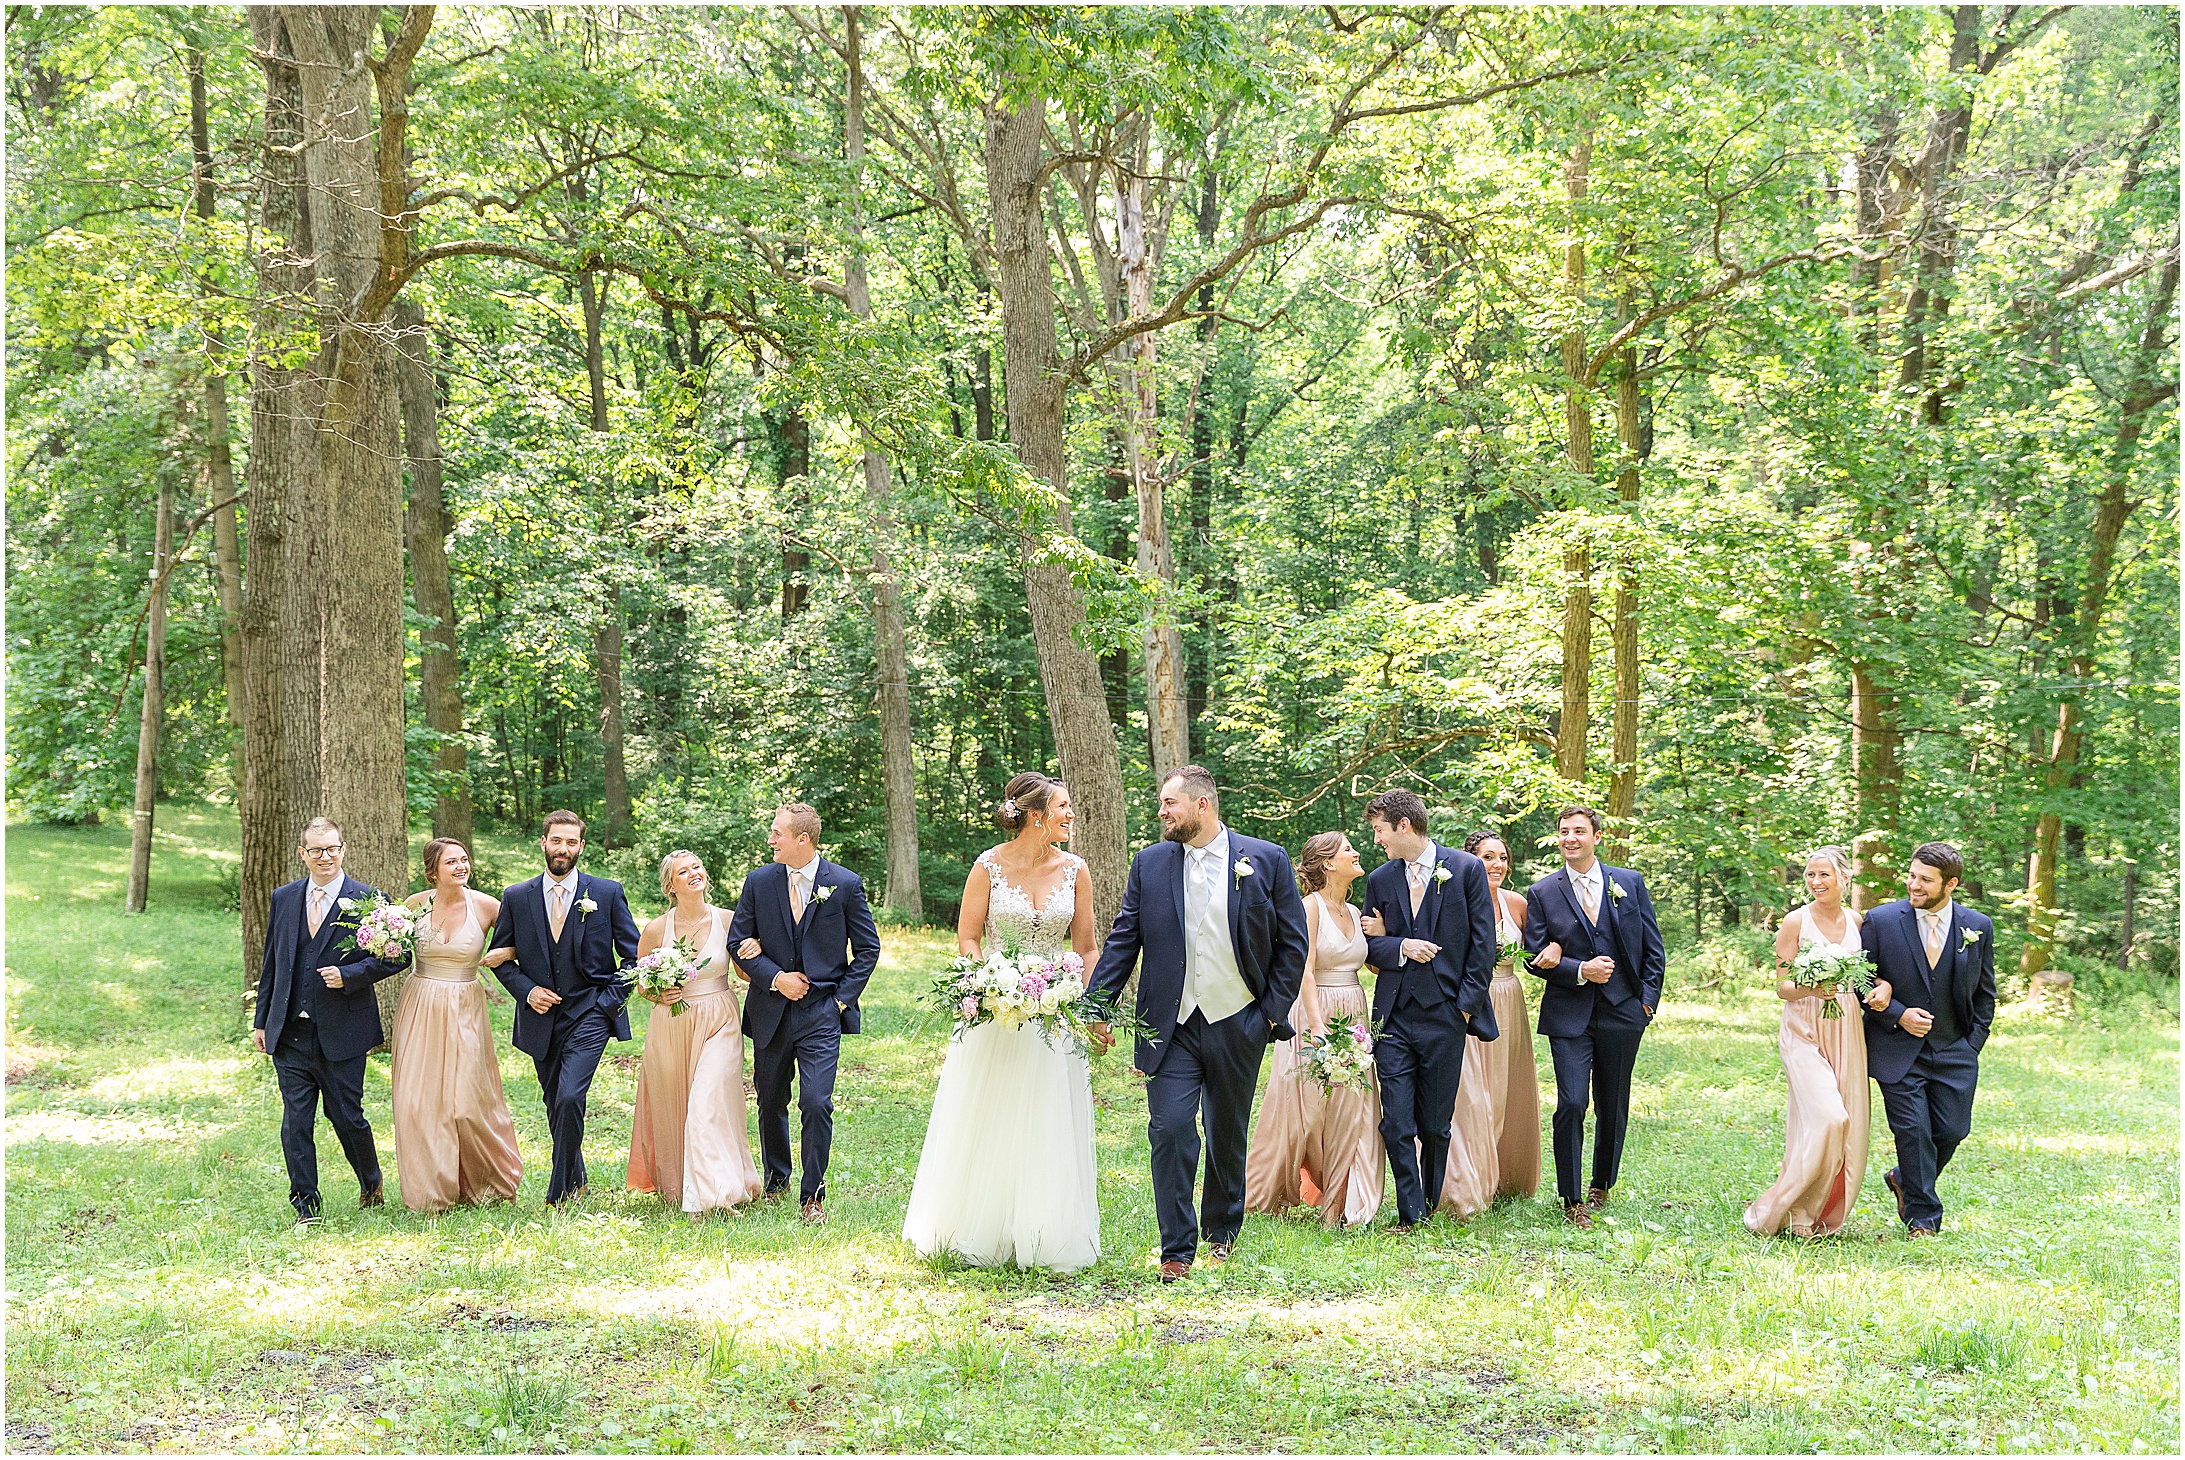 Liz & Nate | Emory Grove Wedding | Maryland Wedding Photographer ...